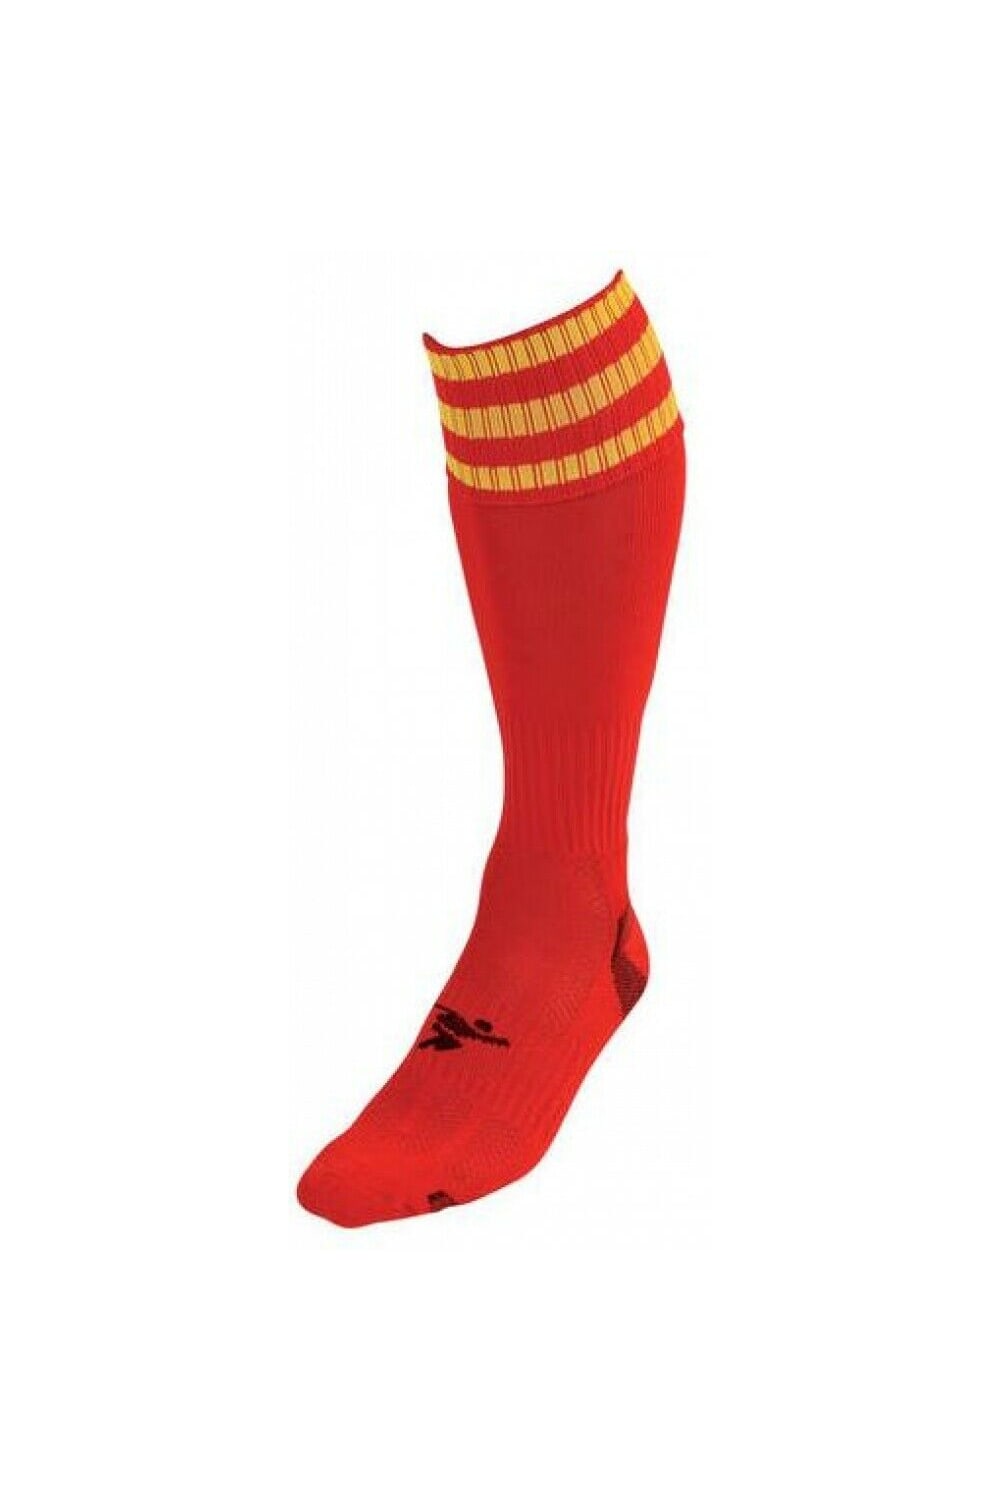 Precision Unisex Adult Pro Football Socks (Red/Yellow)